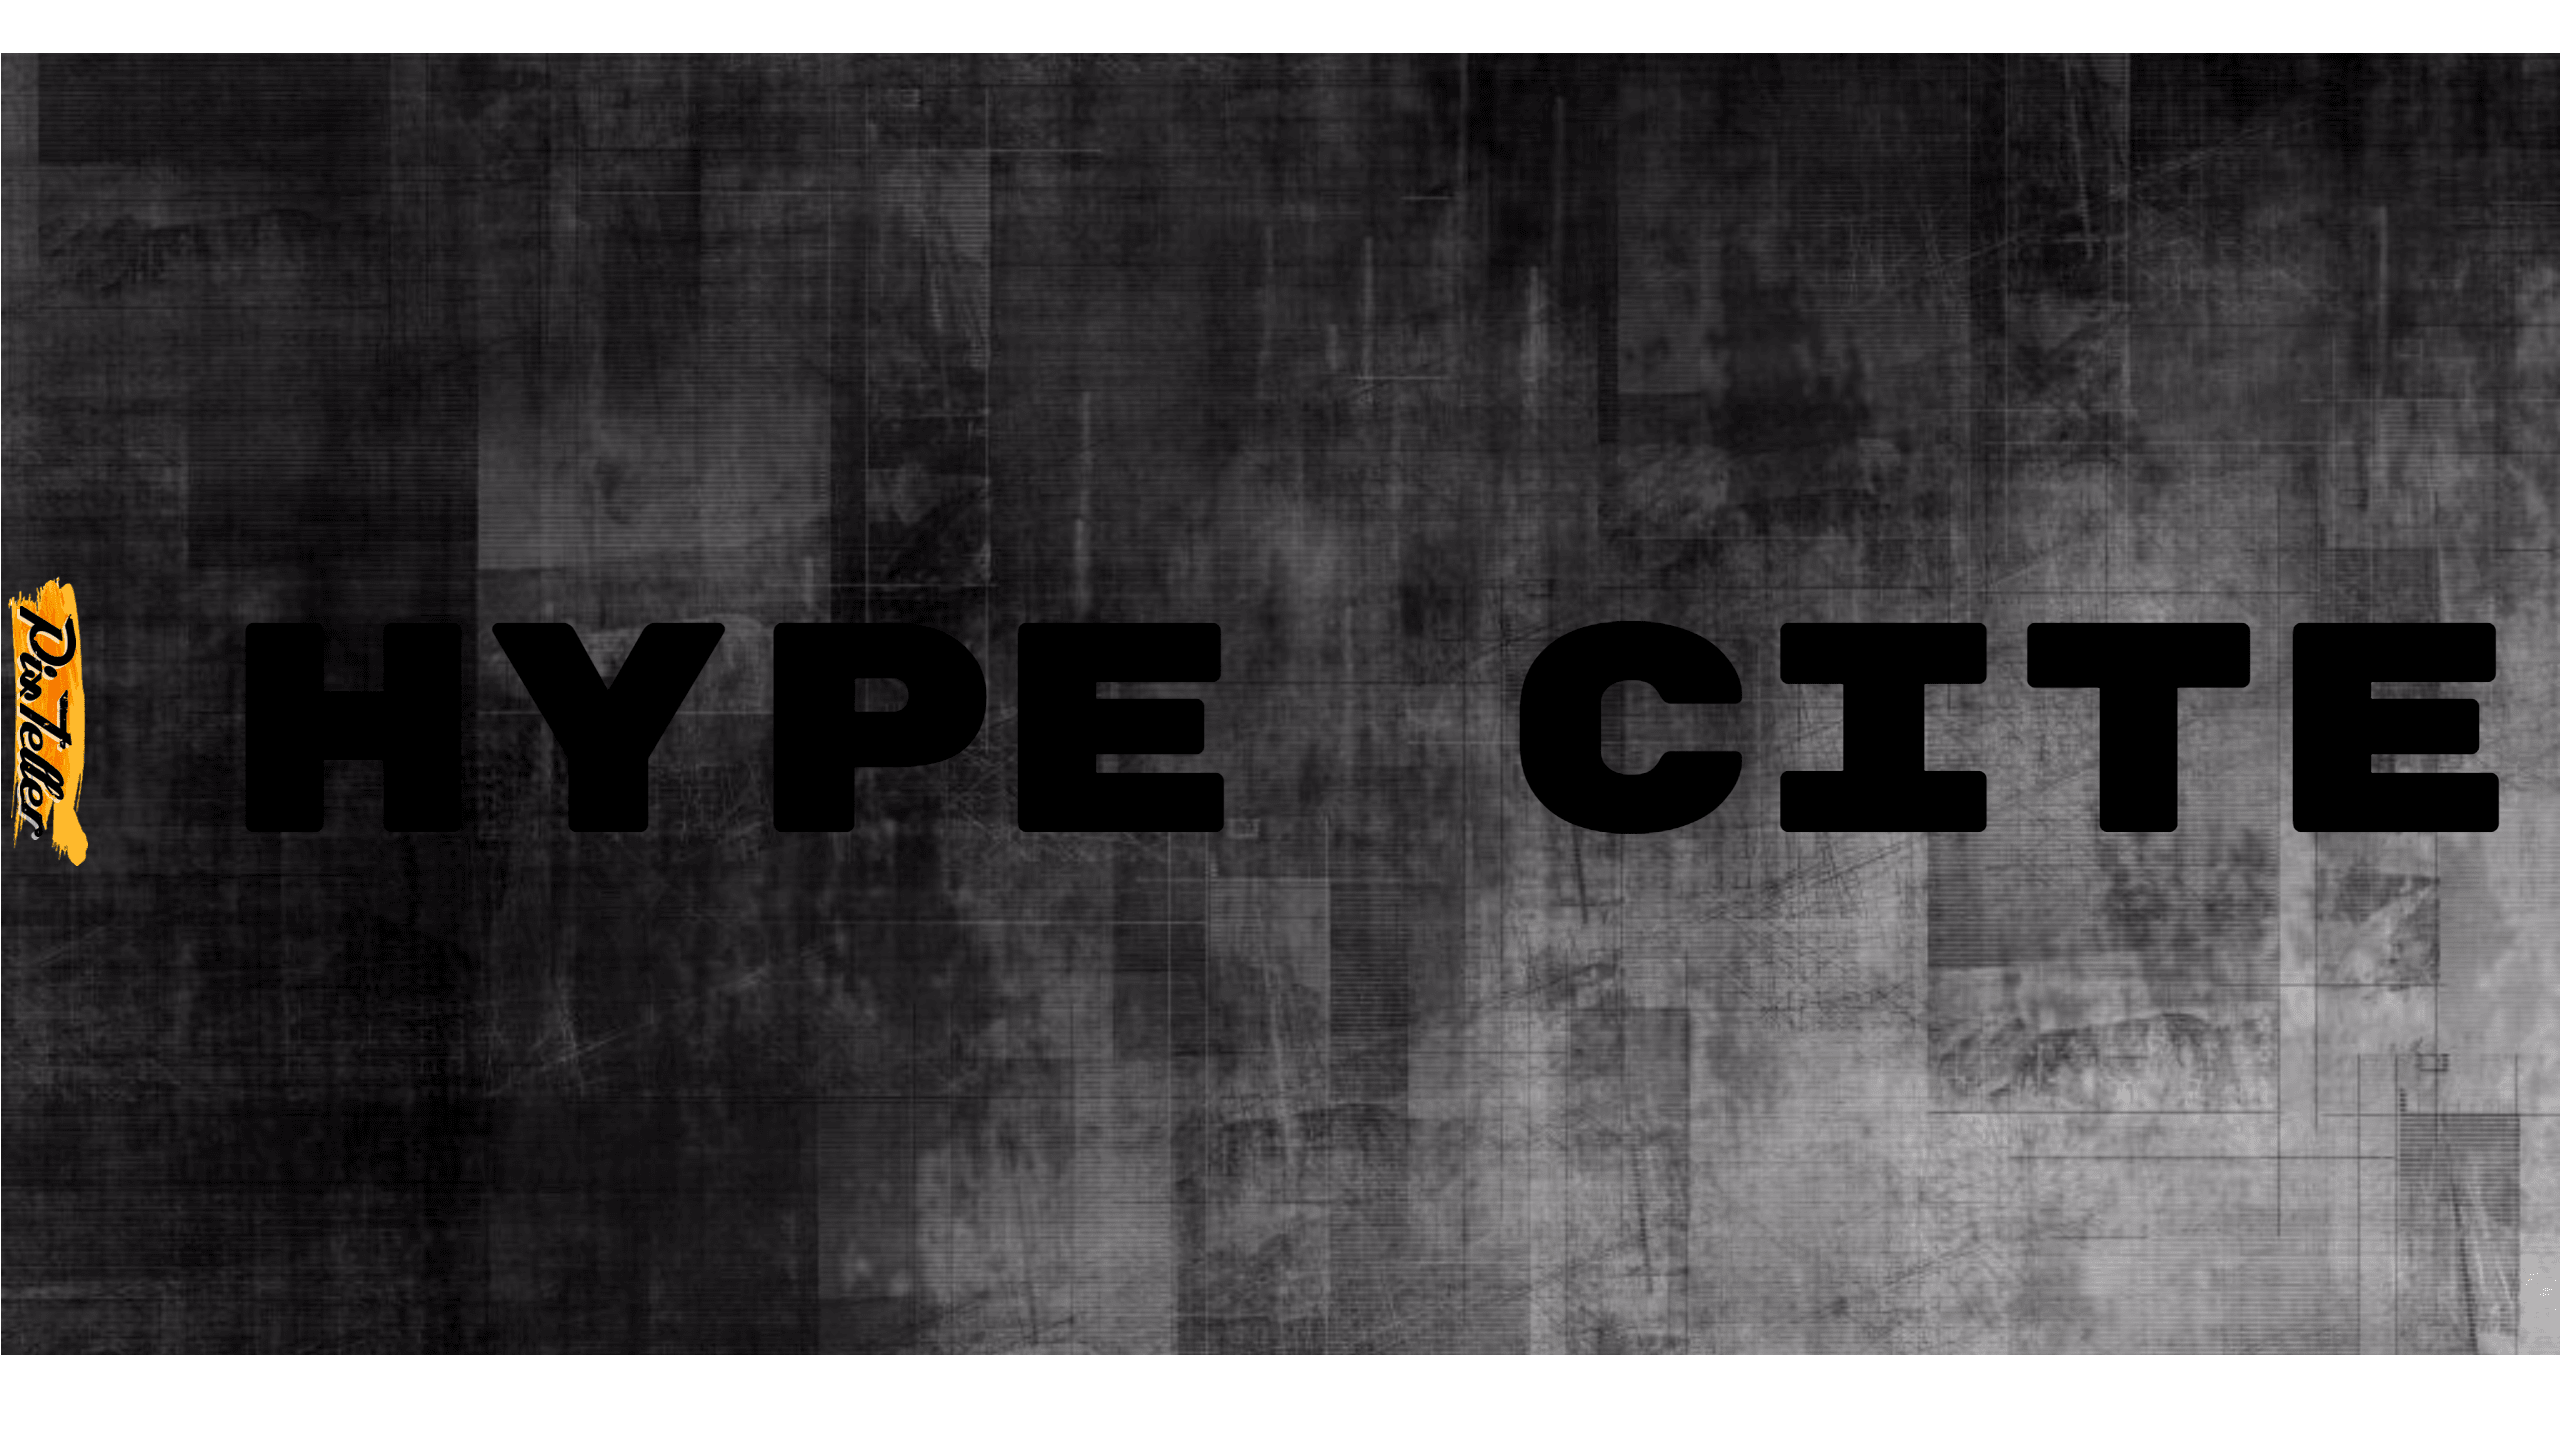 Hype cite Design 